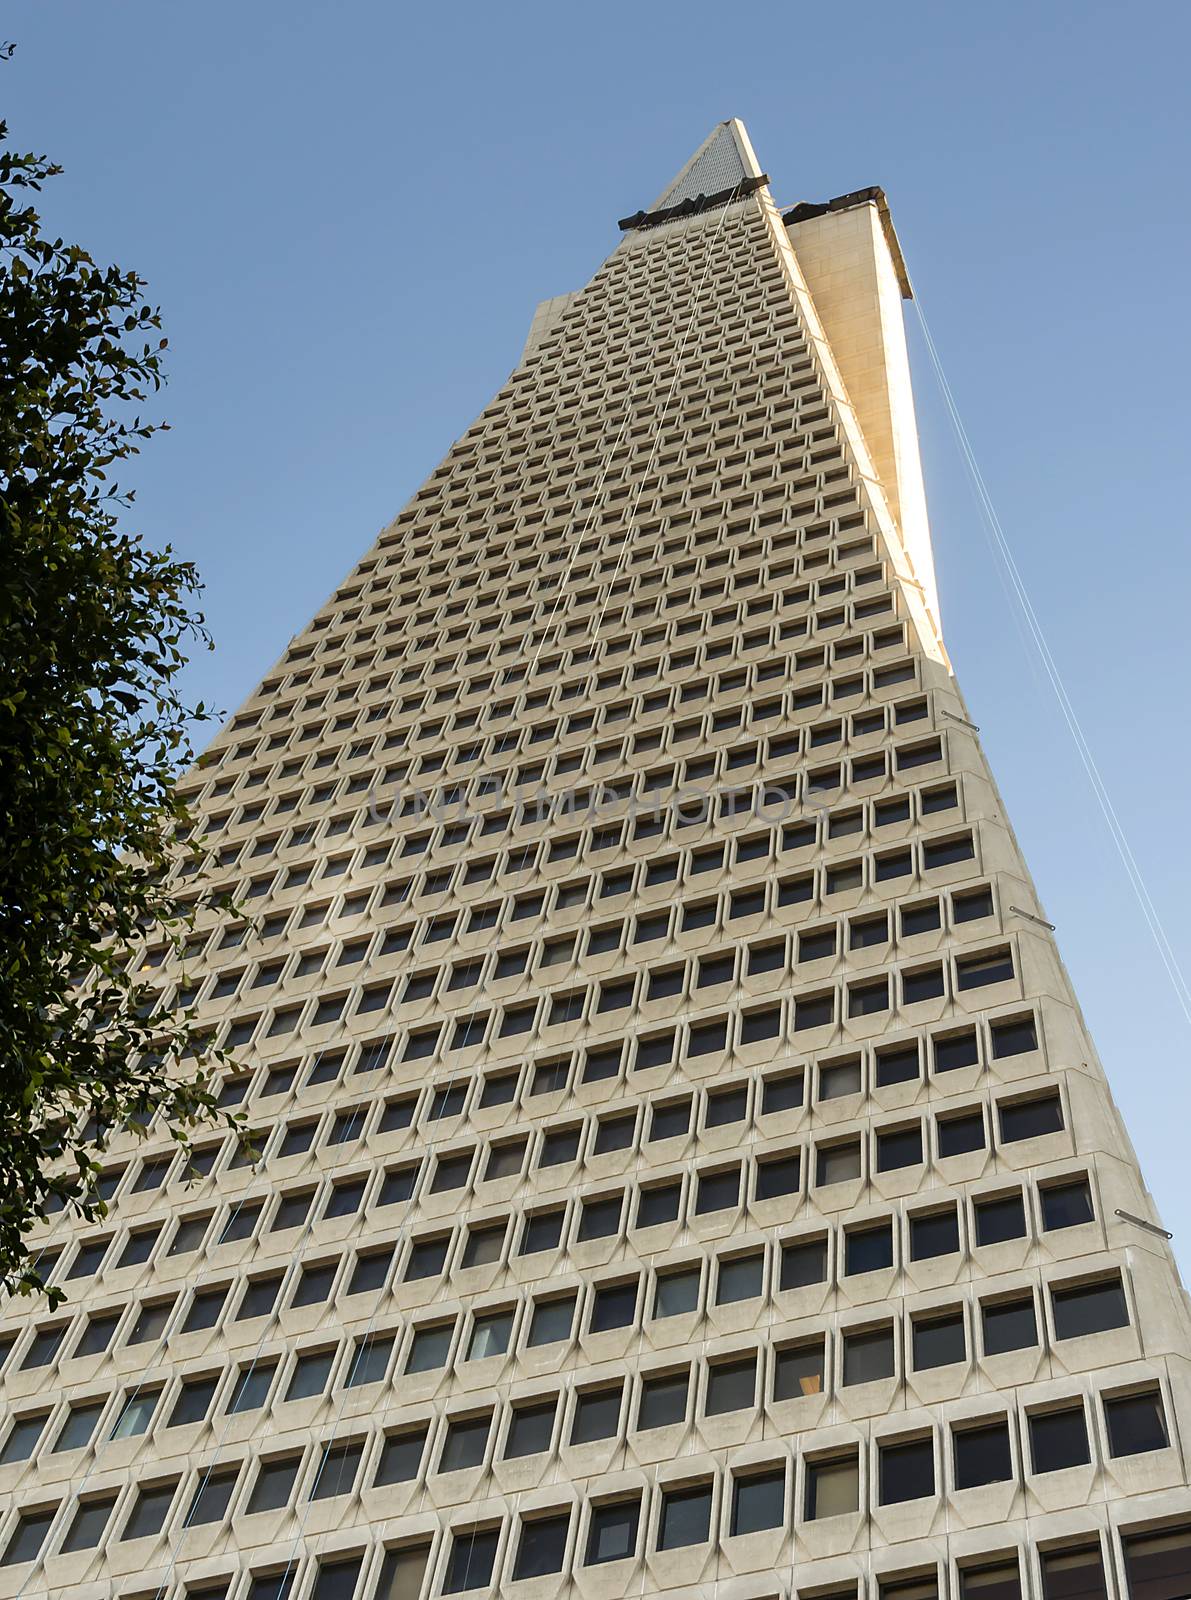 San Francisco, Ca, USA, October 22, 2016: Bottom view of the Transamerica Pyramid